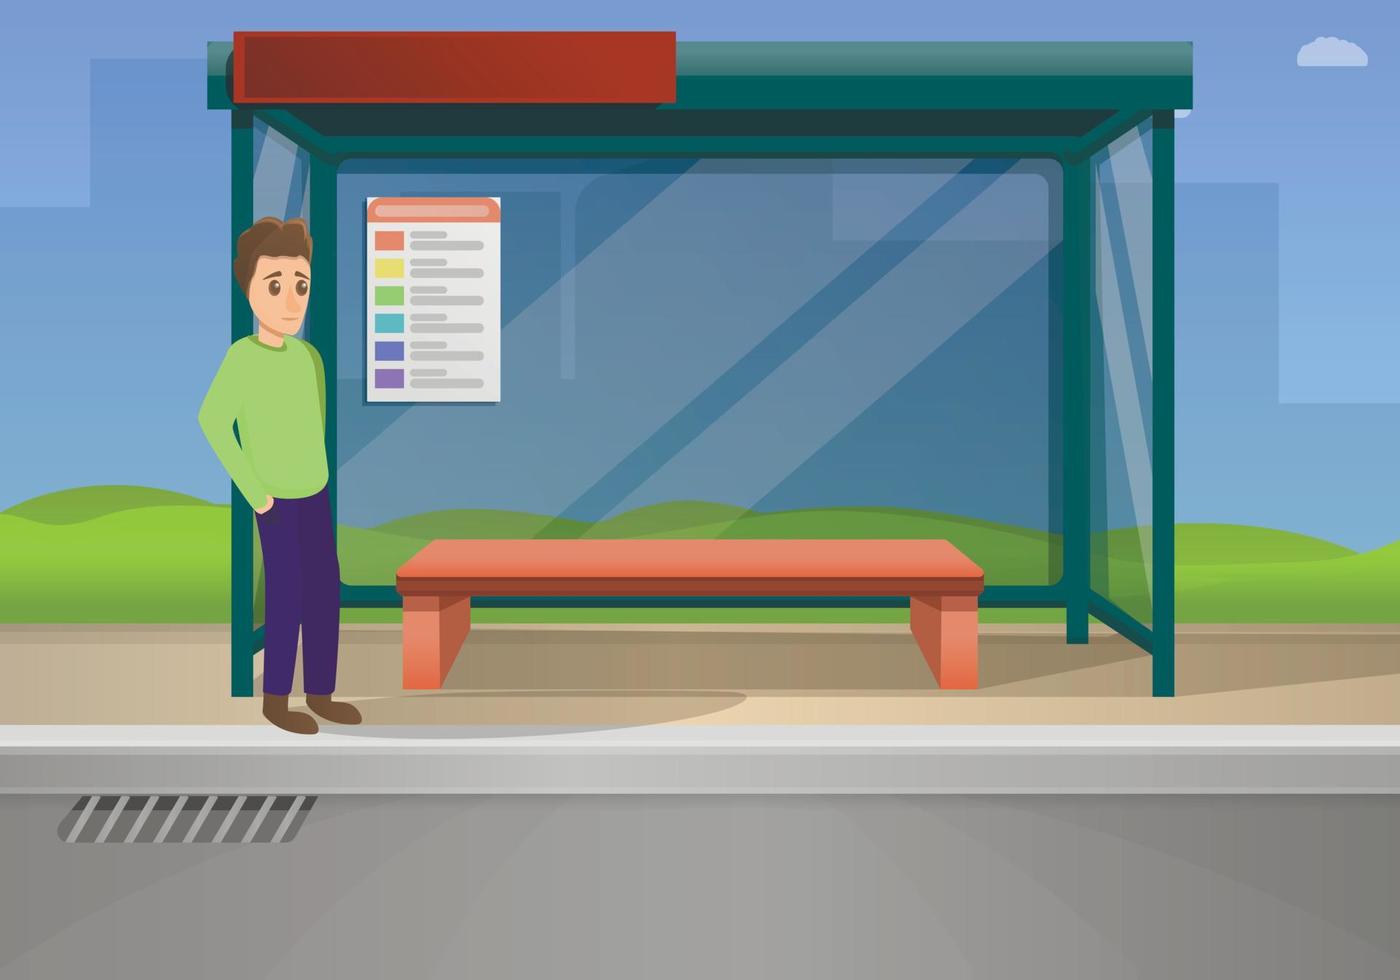 Bus stop concept background, cartoon style vector